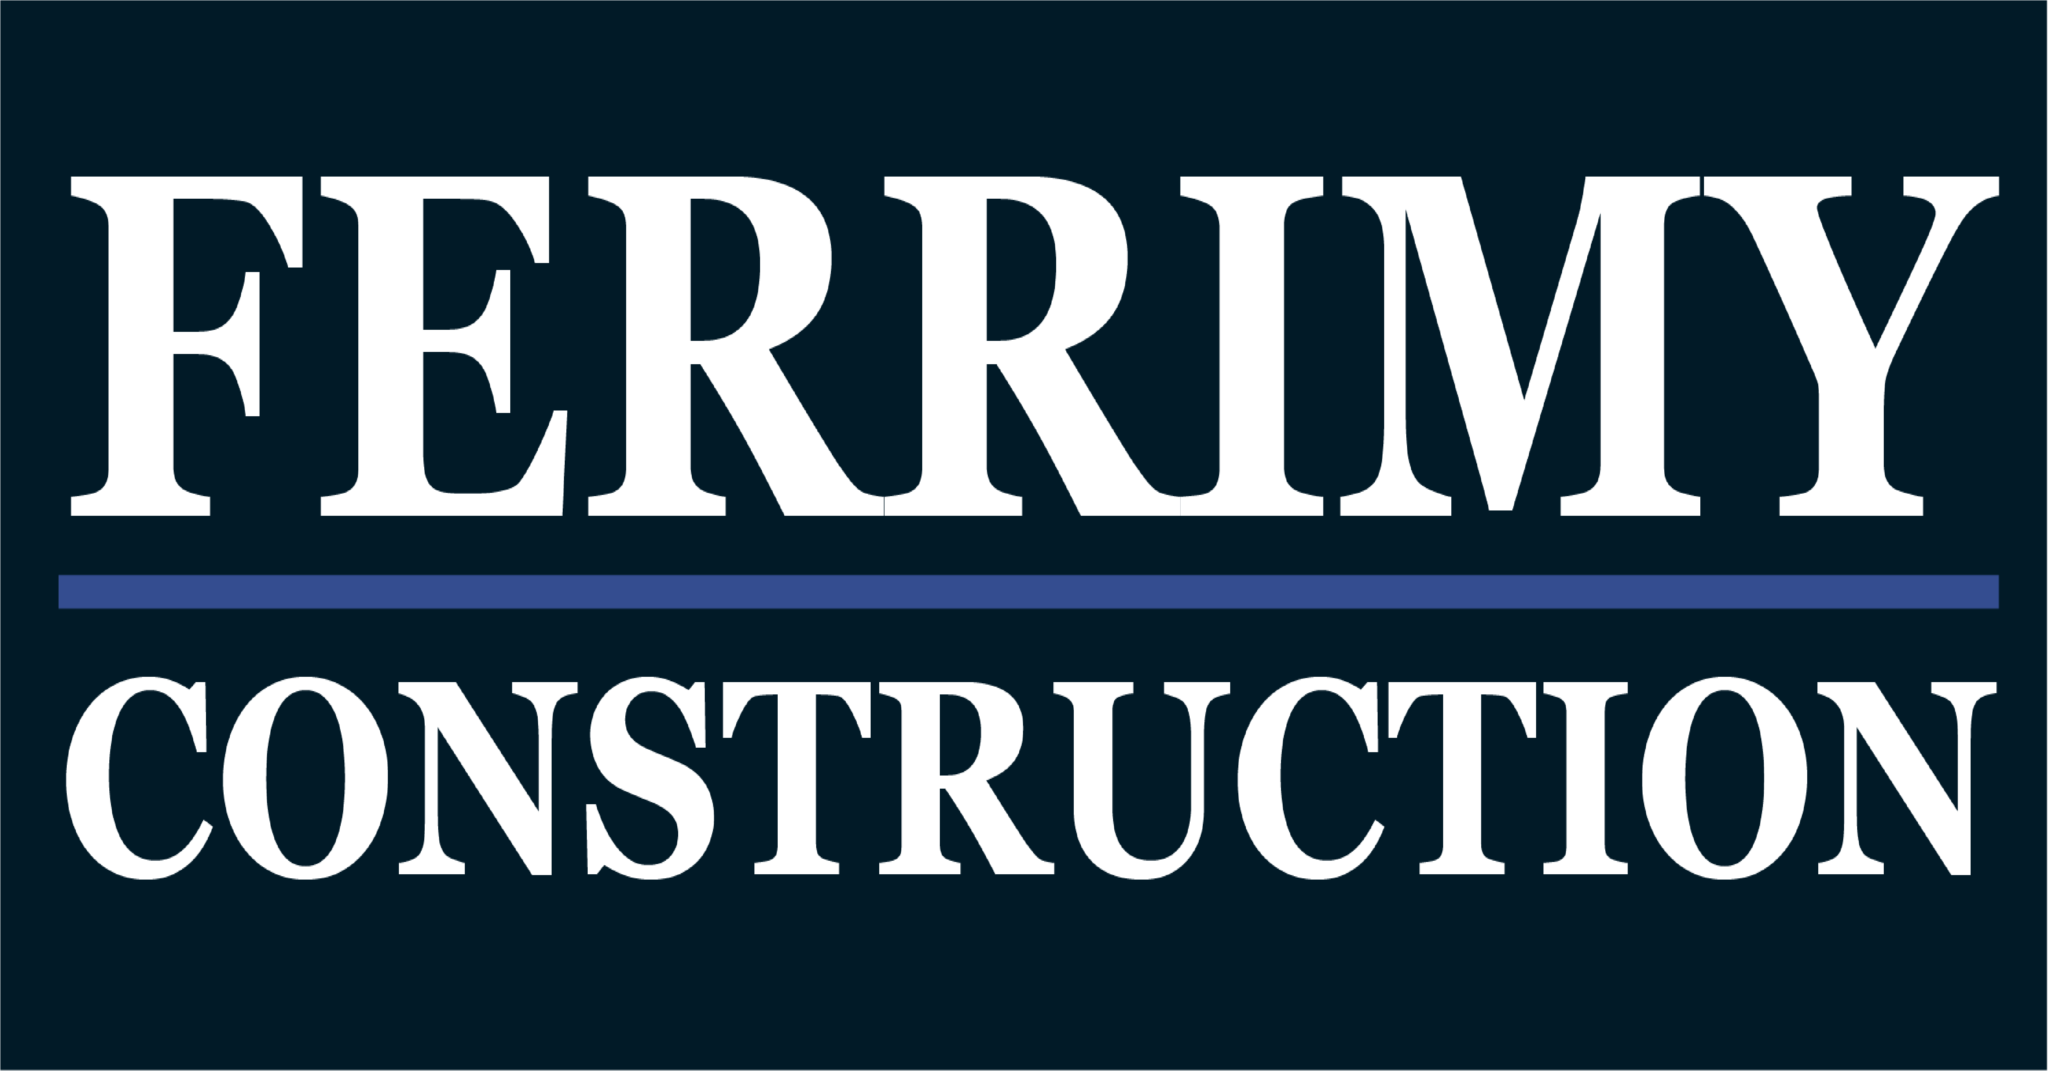 Ferrimy Construction Inc